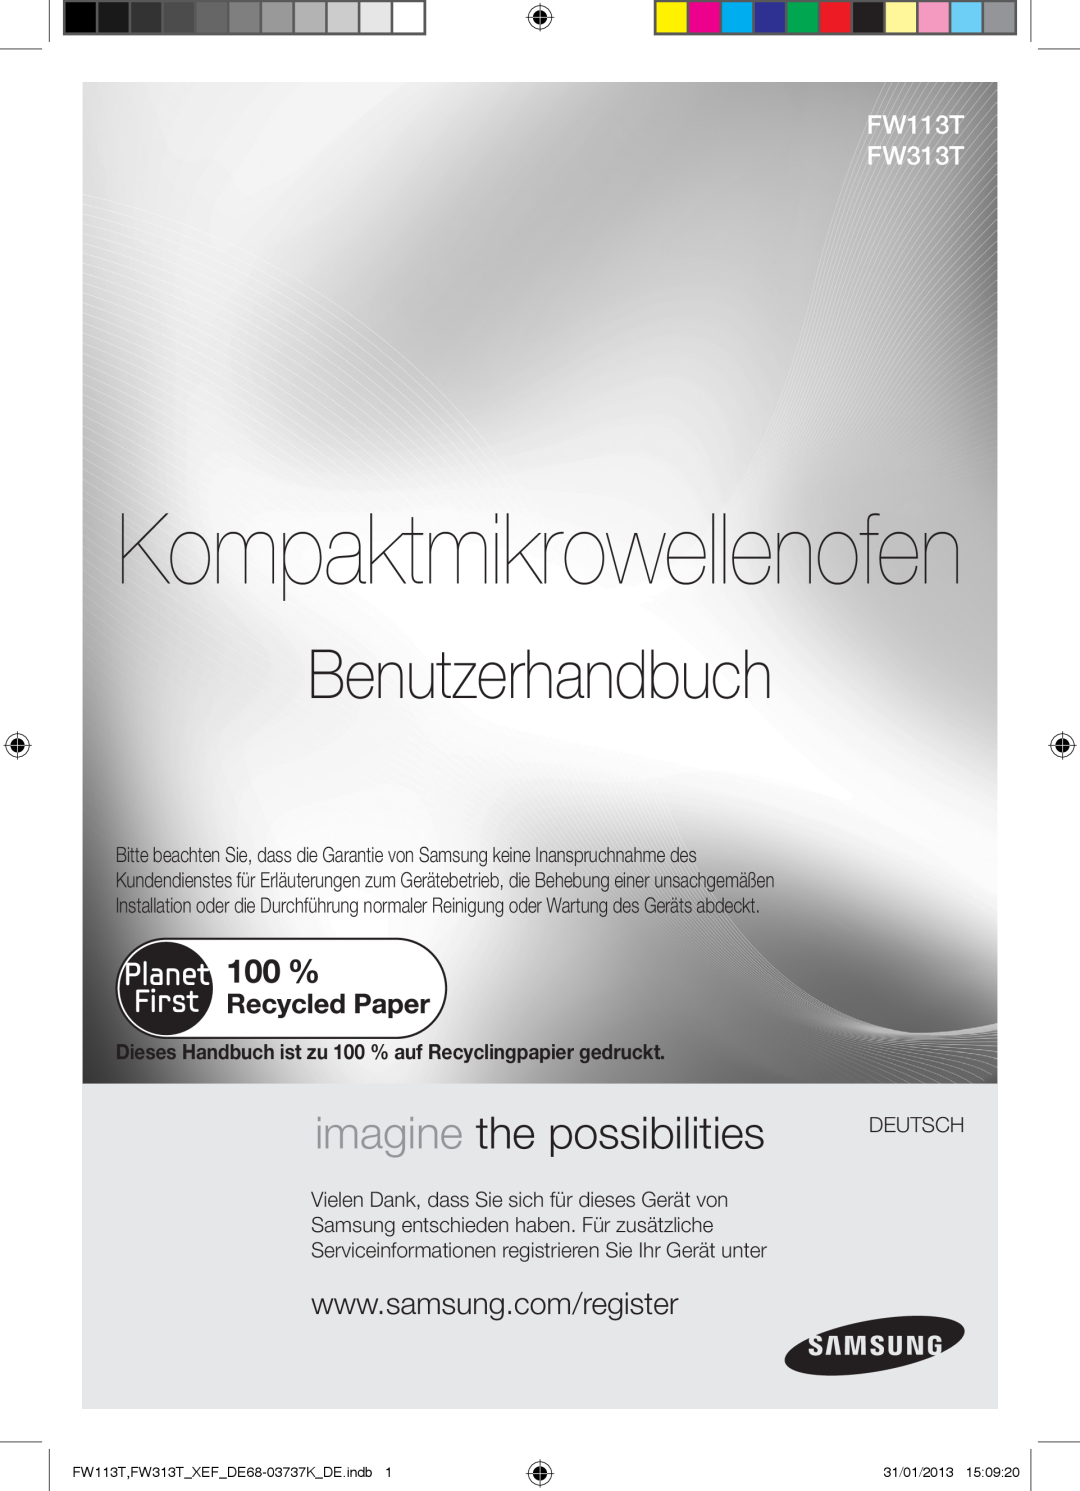 Samsung FW113T002/XEF manual Benutzerhandbuch, Kompaktmikrowellenofen, imagine the possibilities, FW113T FW313T 